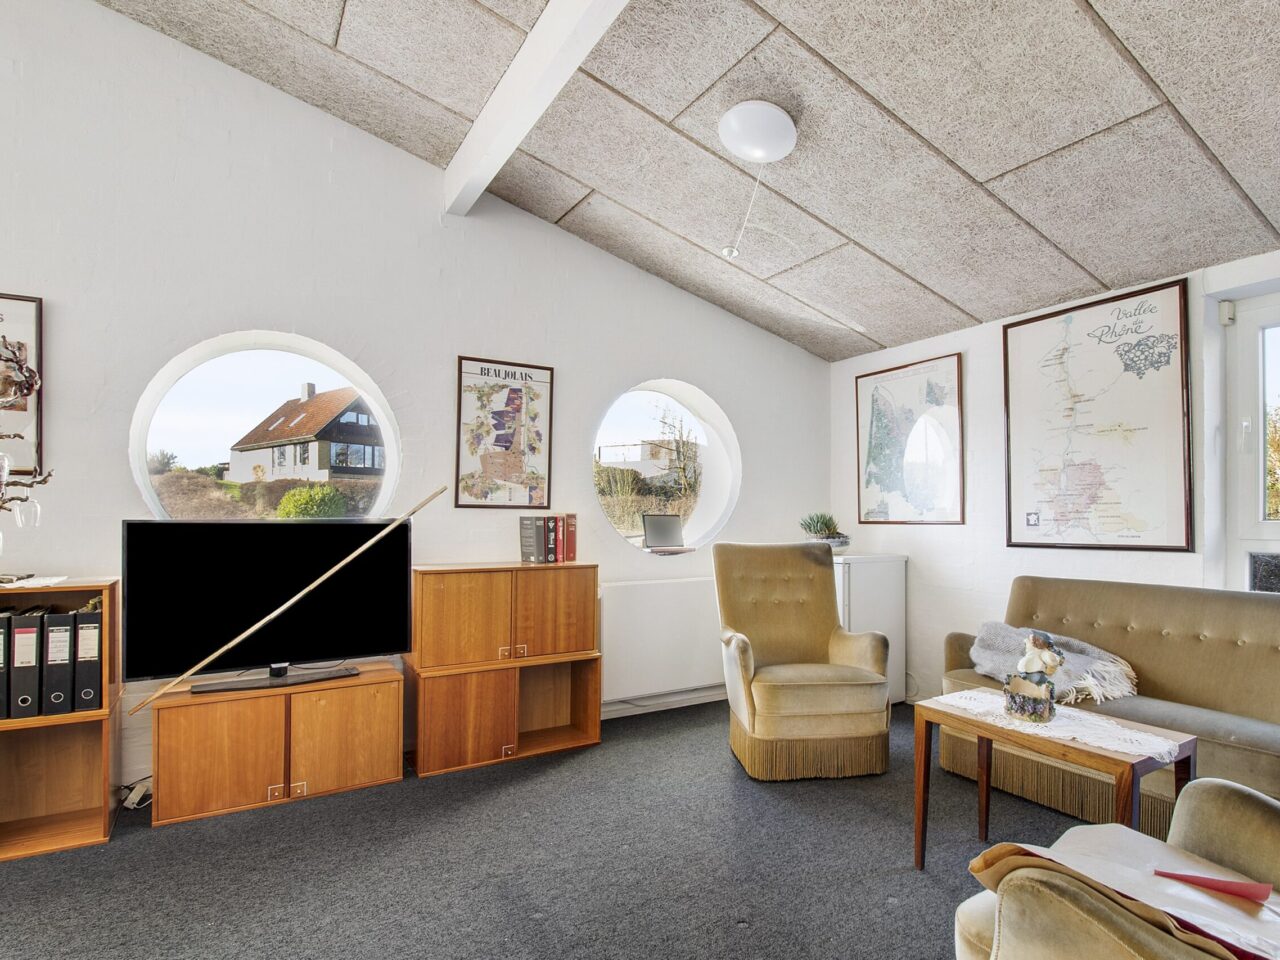 Kontor til salg i Kolding - Lys lokale med mange vinduer og grå gulvtæp, perfekt som et Kontor